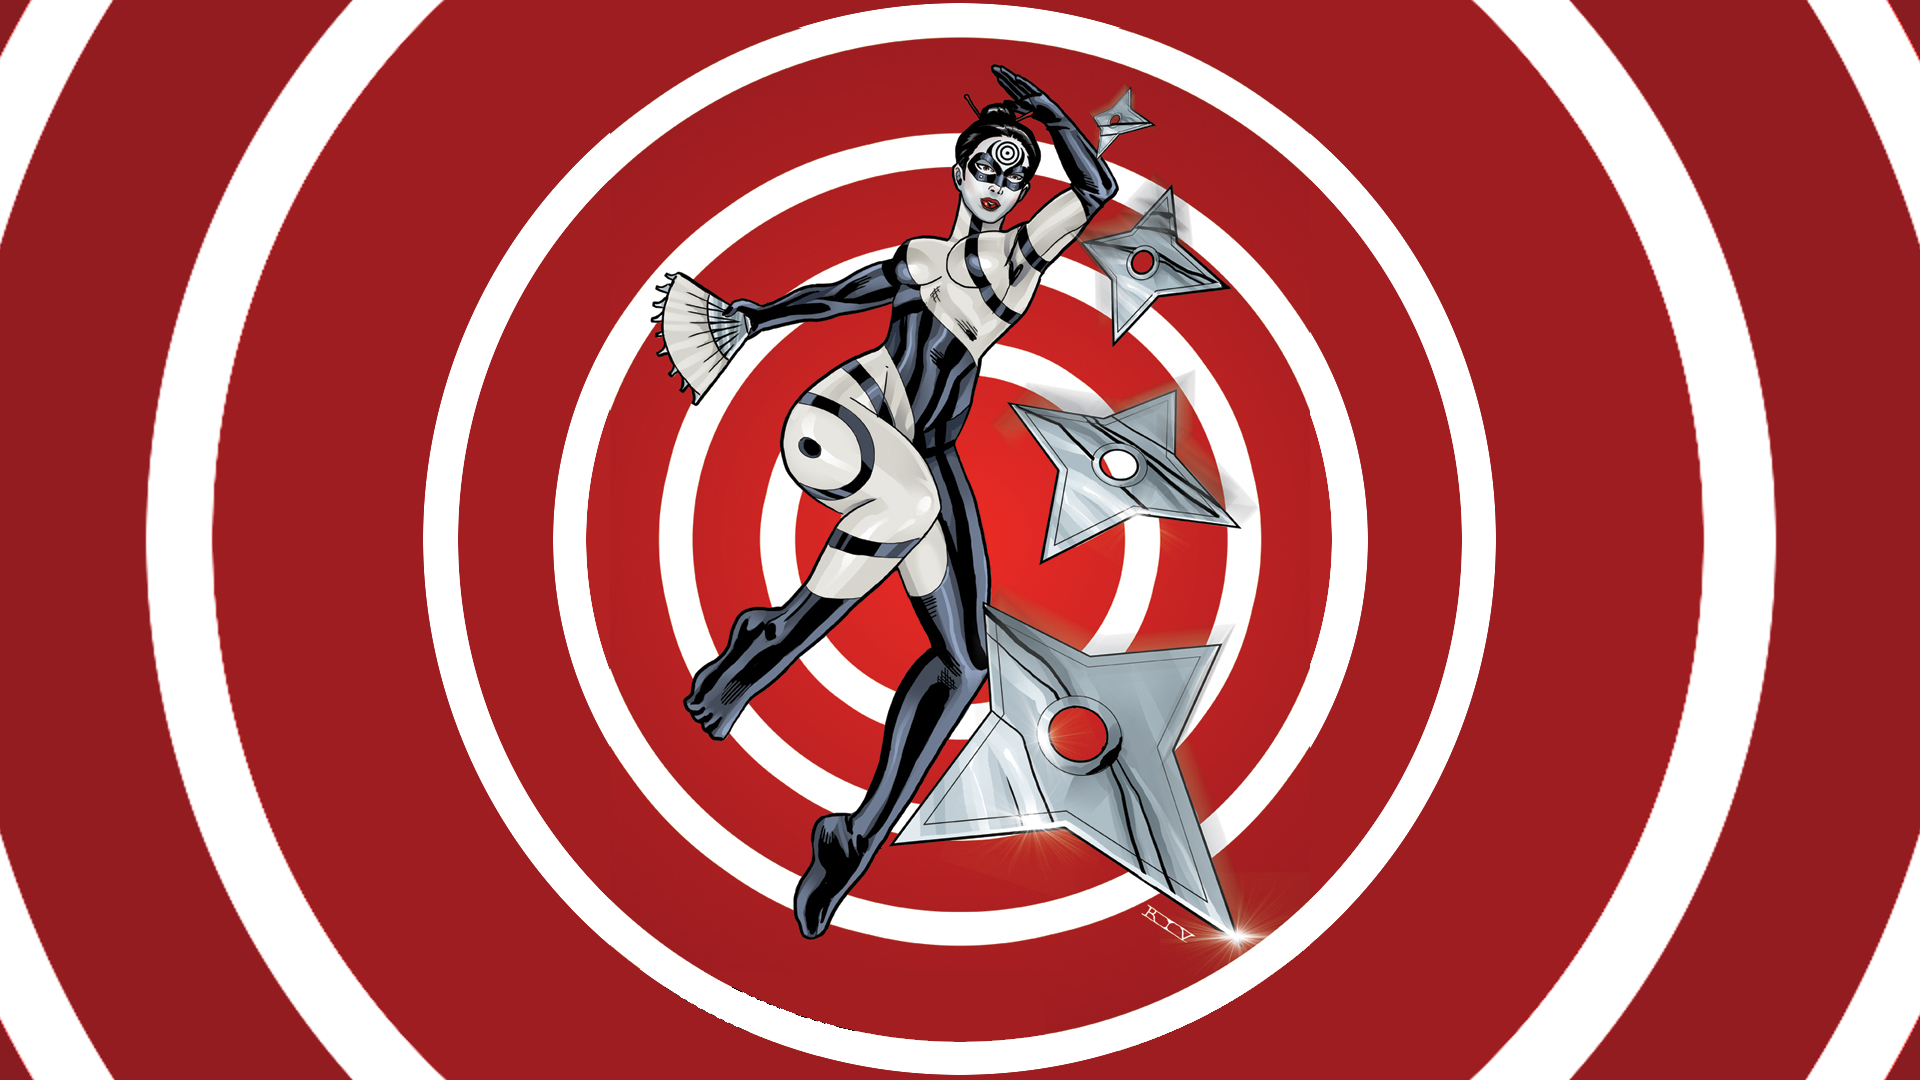 Lady bullseye HD Wallpaper by Nick Rivers